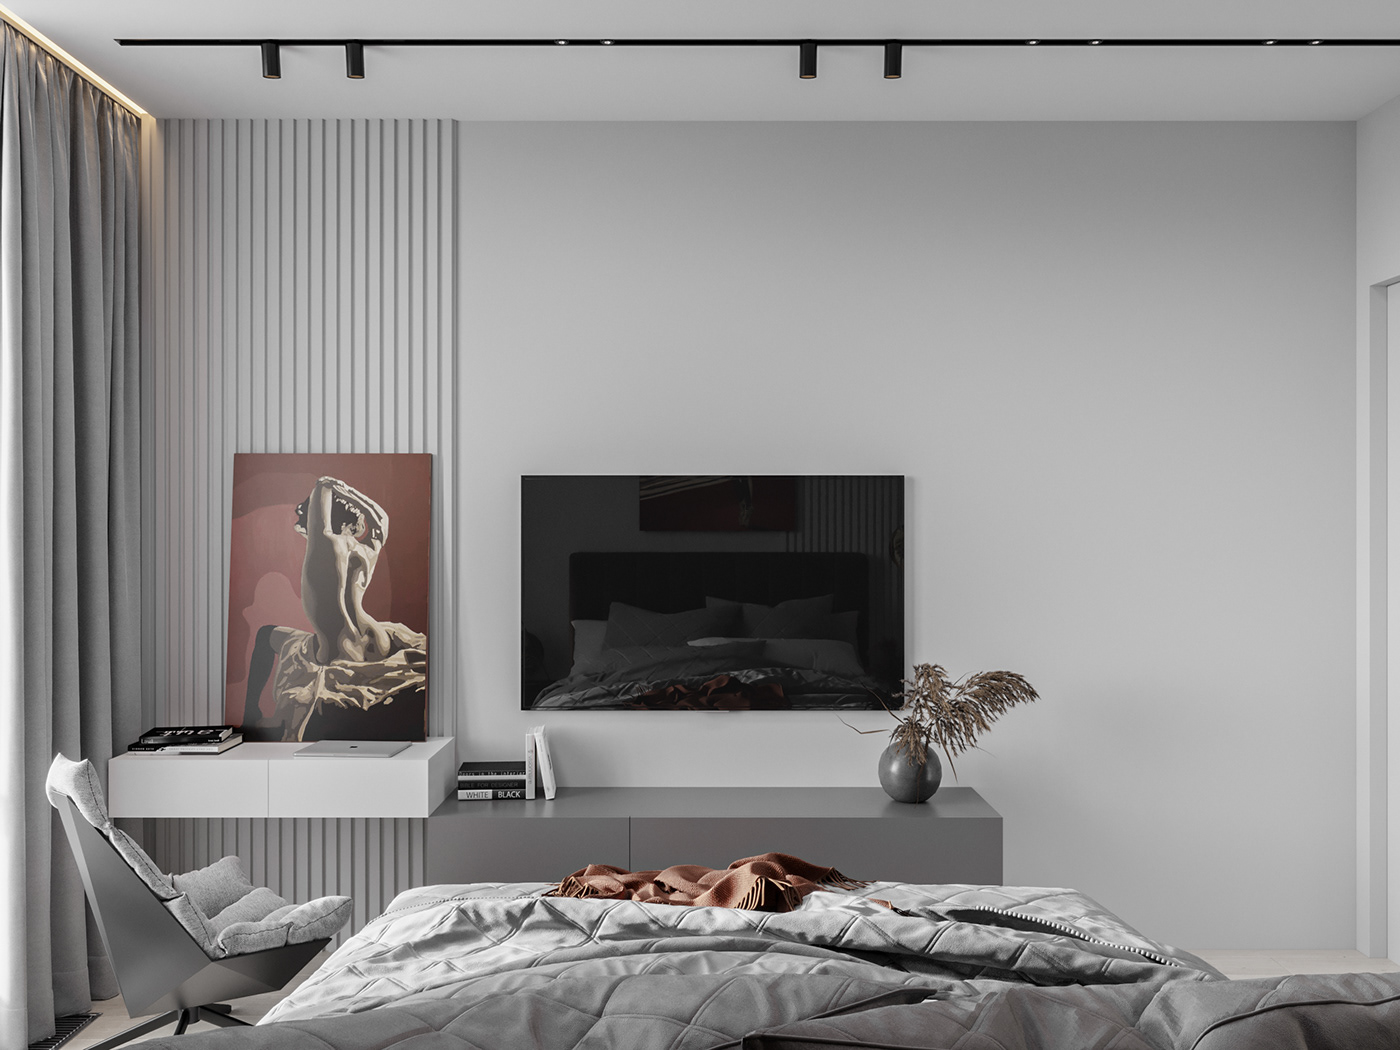 3drendering 3dsmax architect corona interiordesign Render visualization